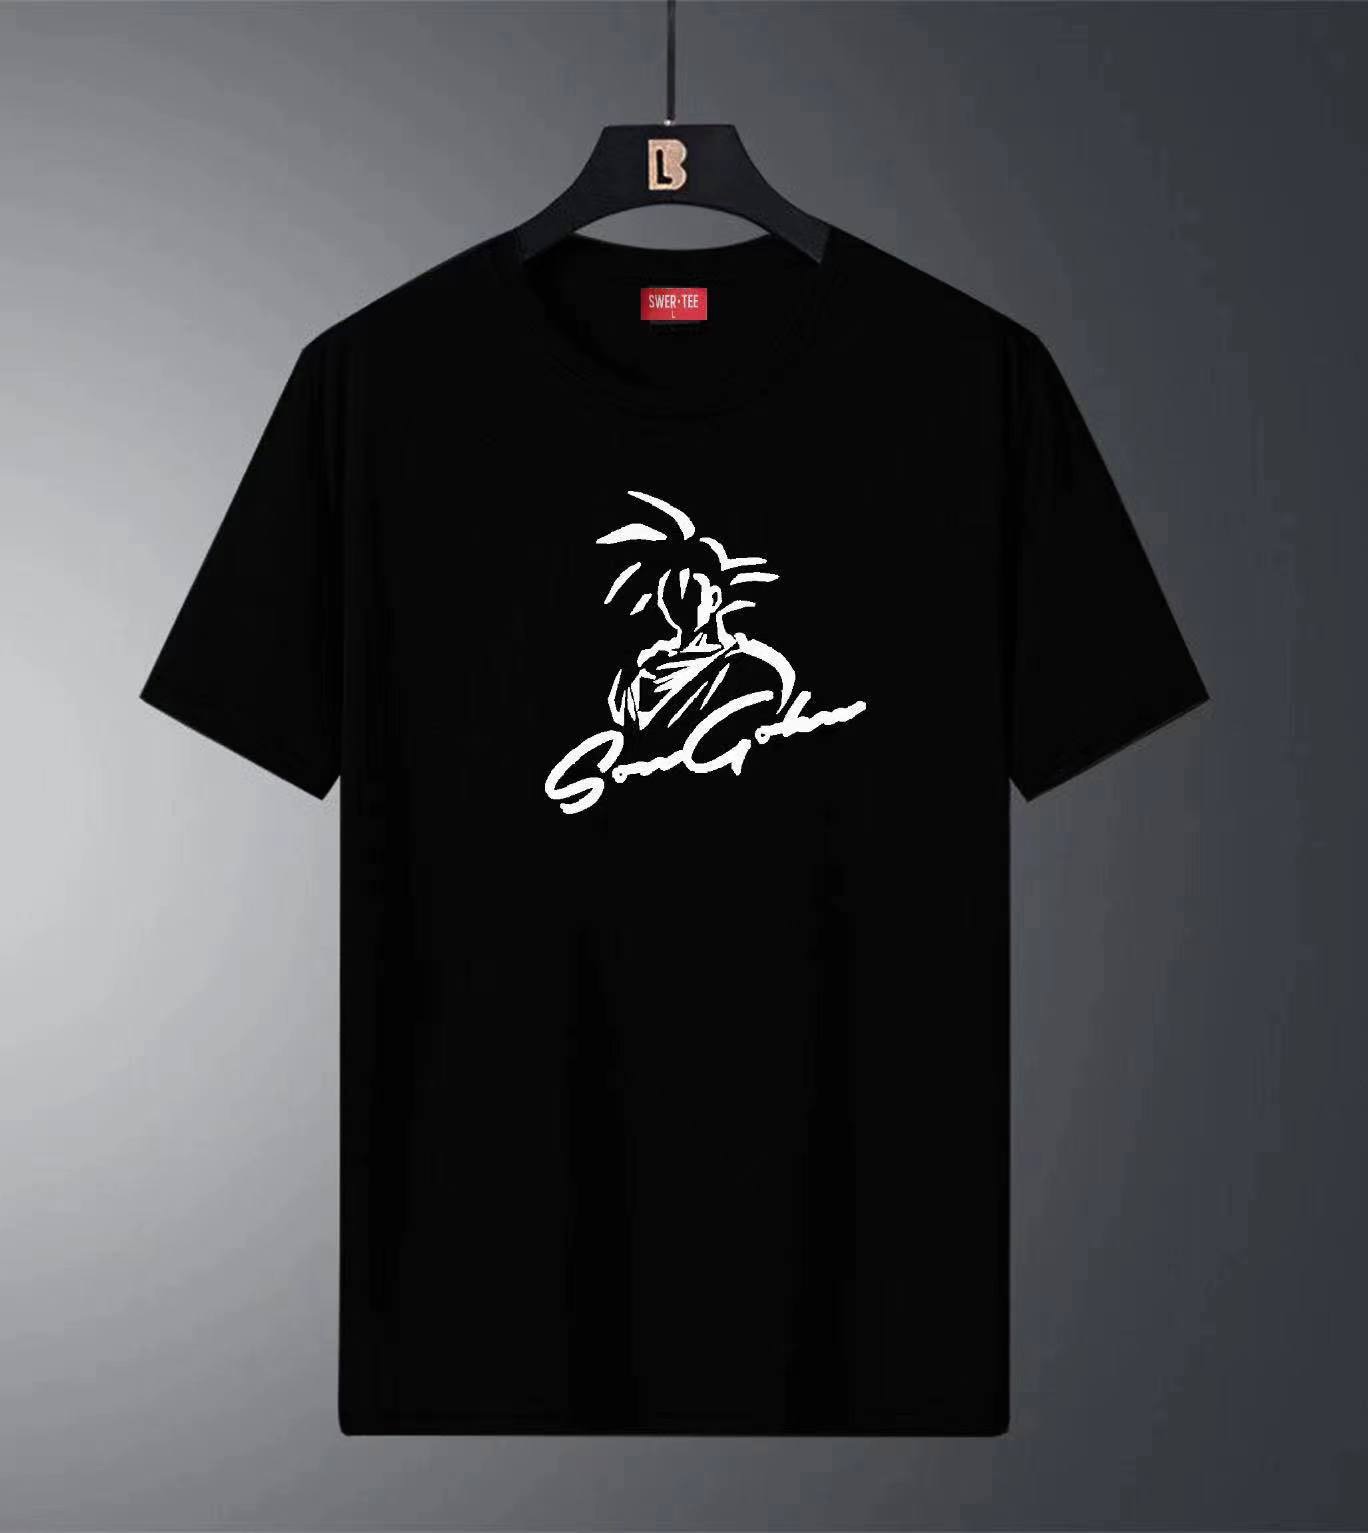 Son goku anime Drifit t-shirt unisex size M L XL